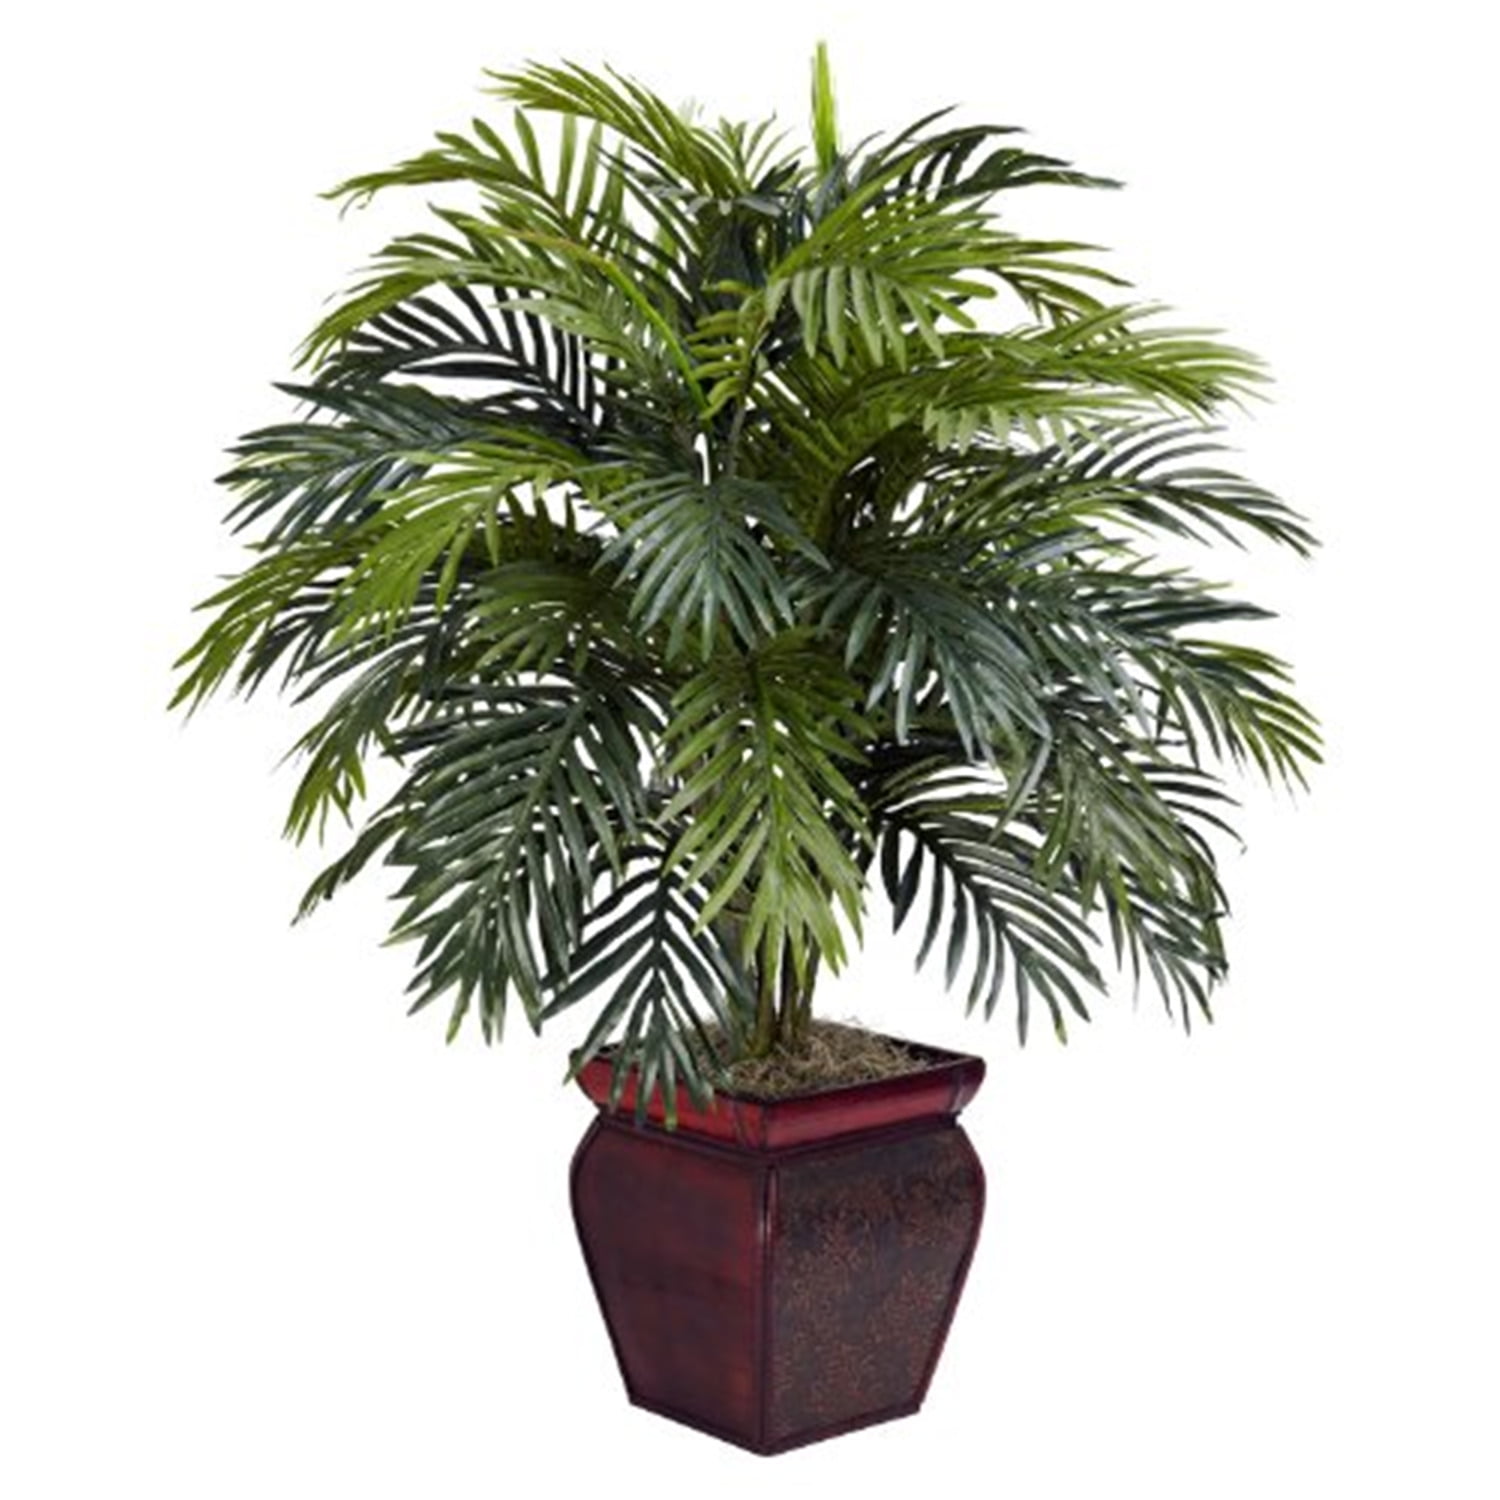 TWO 5' Dwarf Areca Palm Artificial Trees Silk Plant 612 